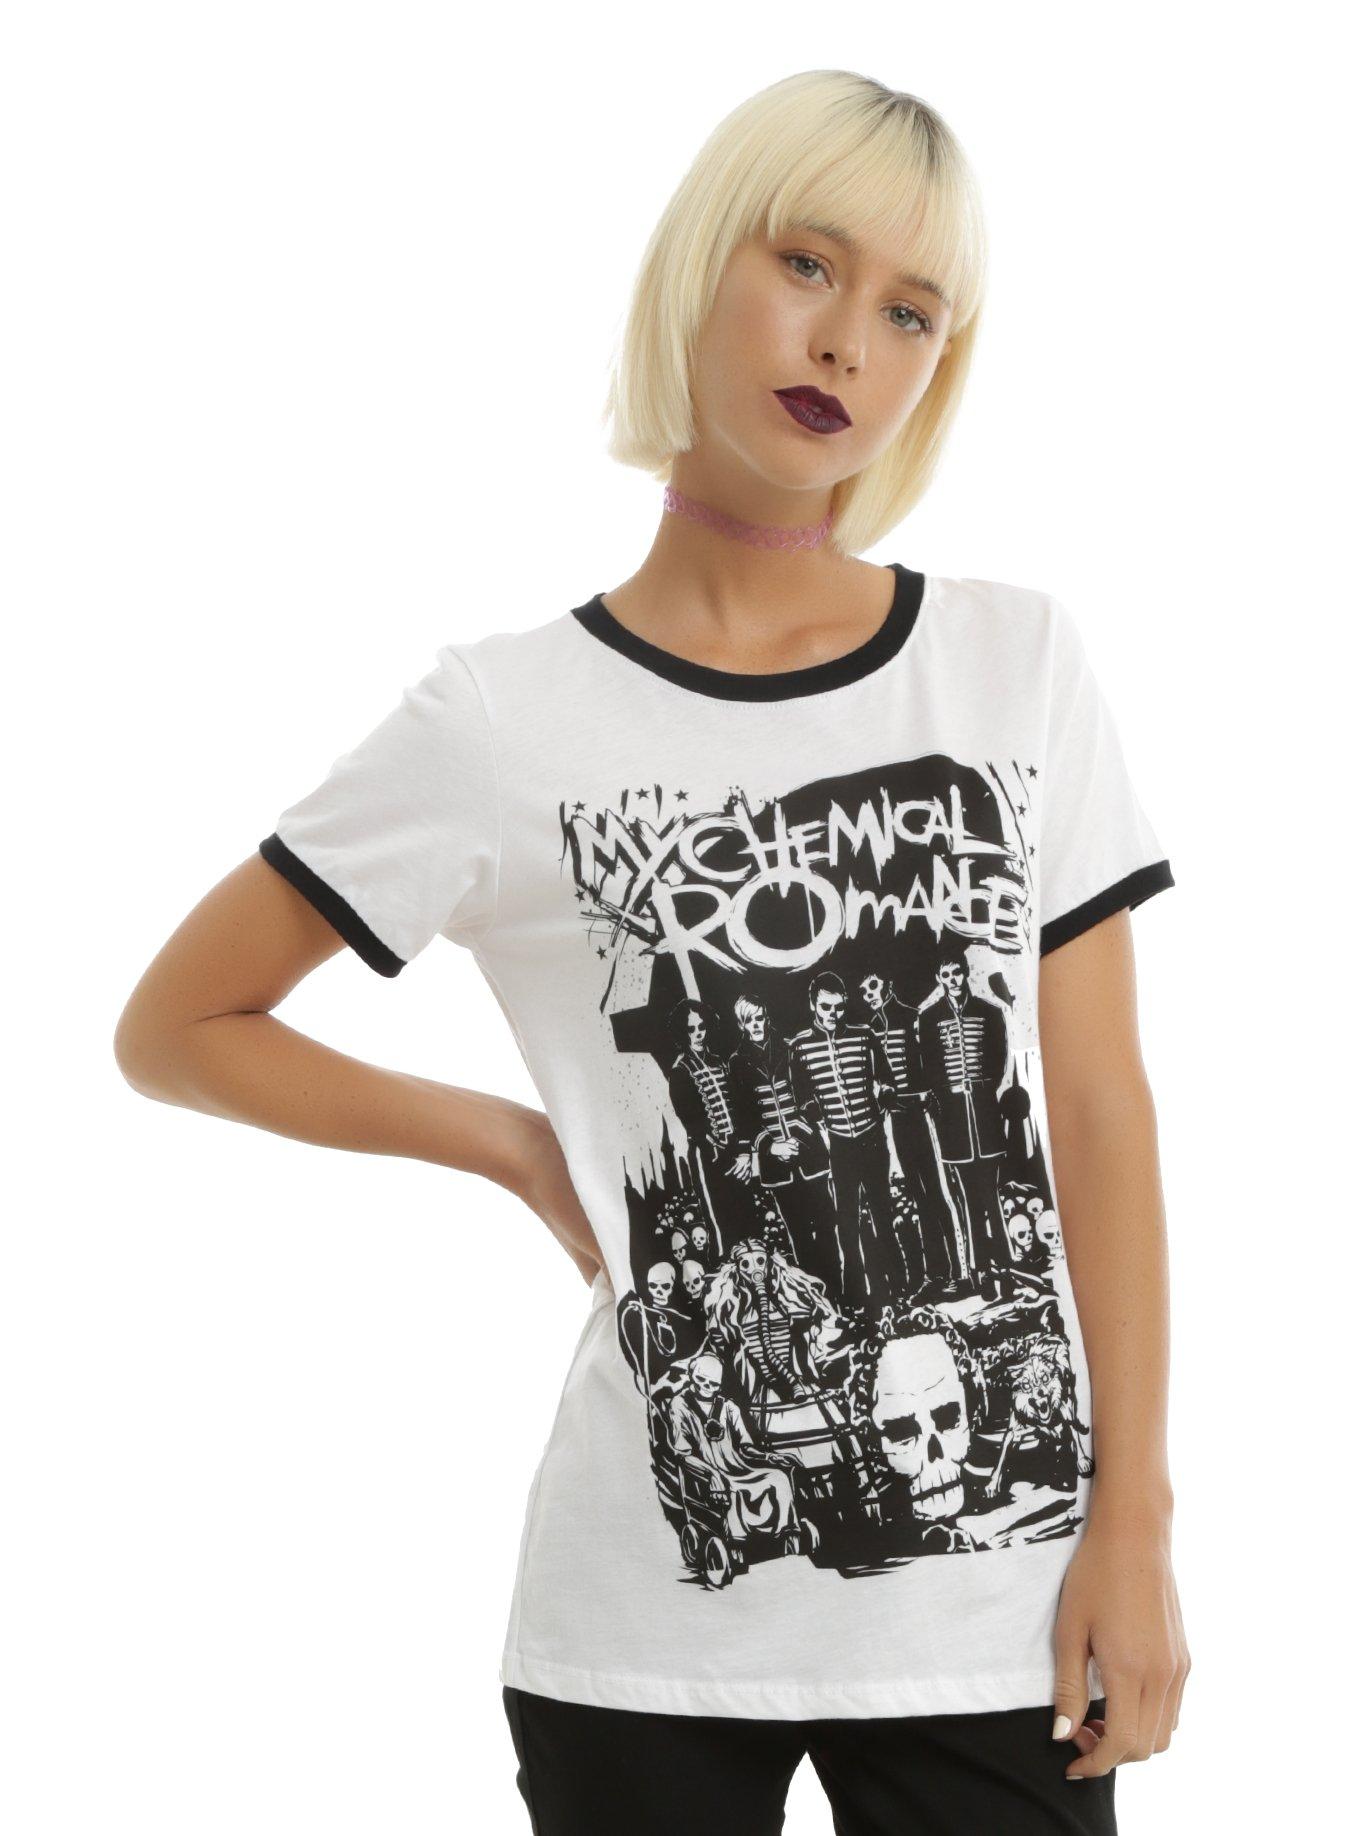 My Chemical Romance Black Parade Girls Ringer T-Shirt, WHITE, hi-res